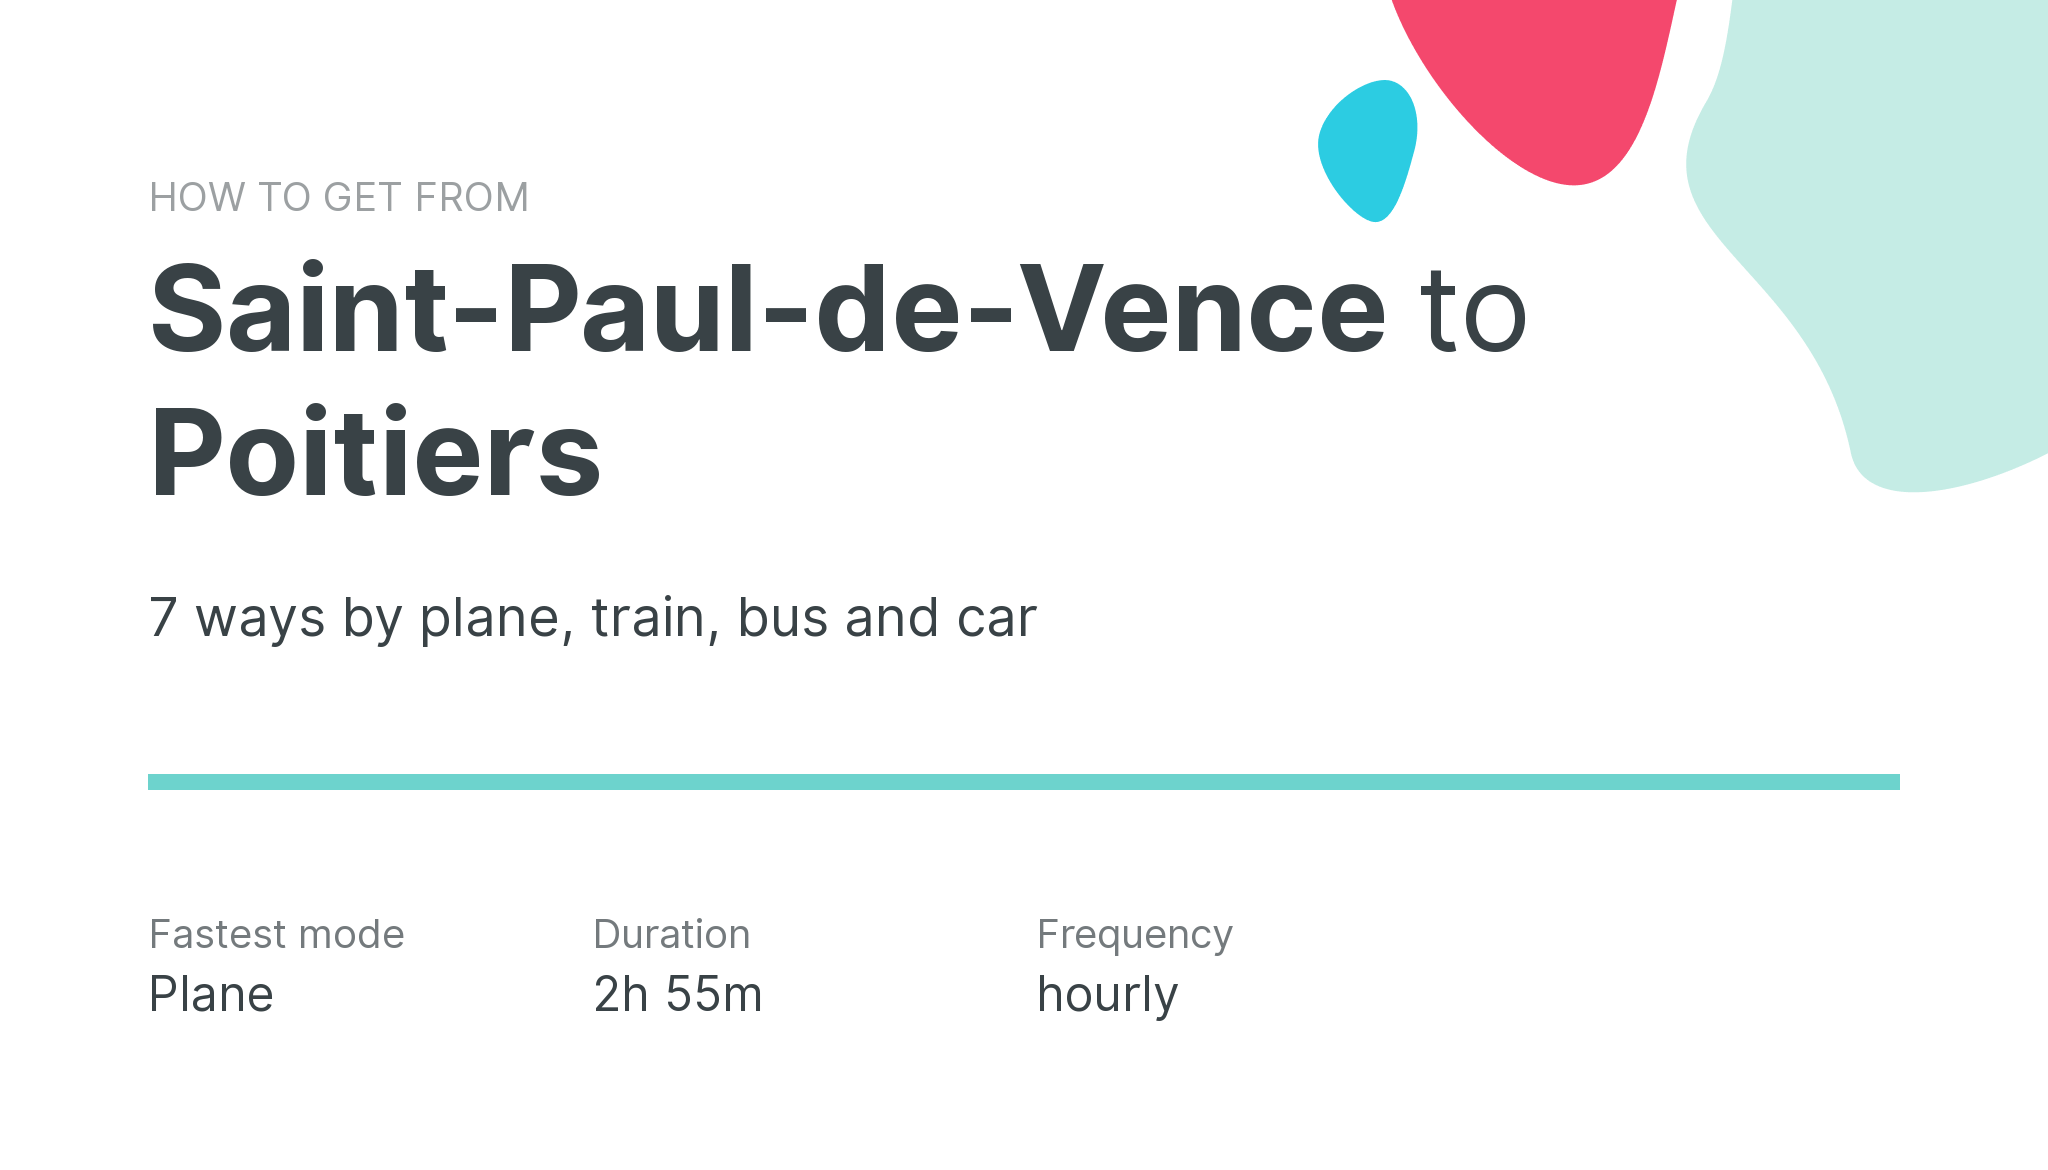 How do I get from Saint-Paul-de-Vence to Poitiers